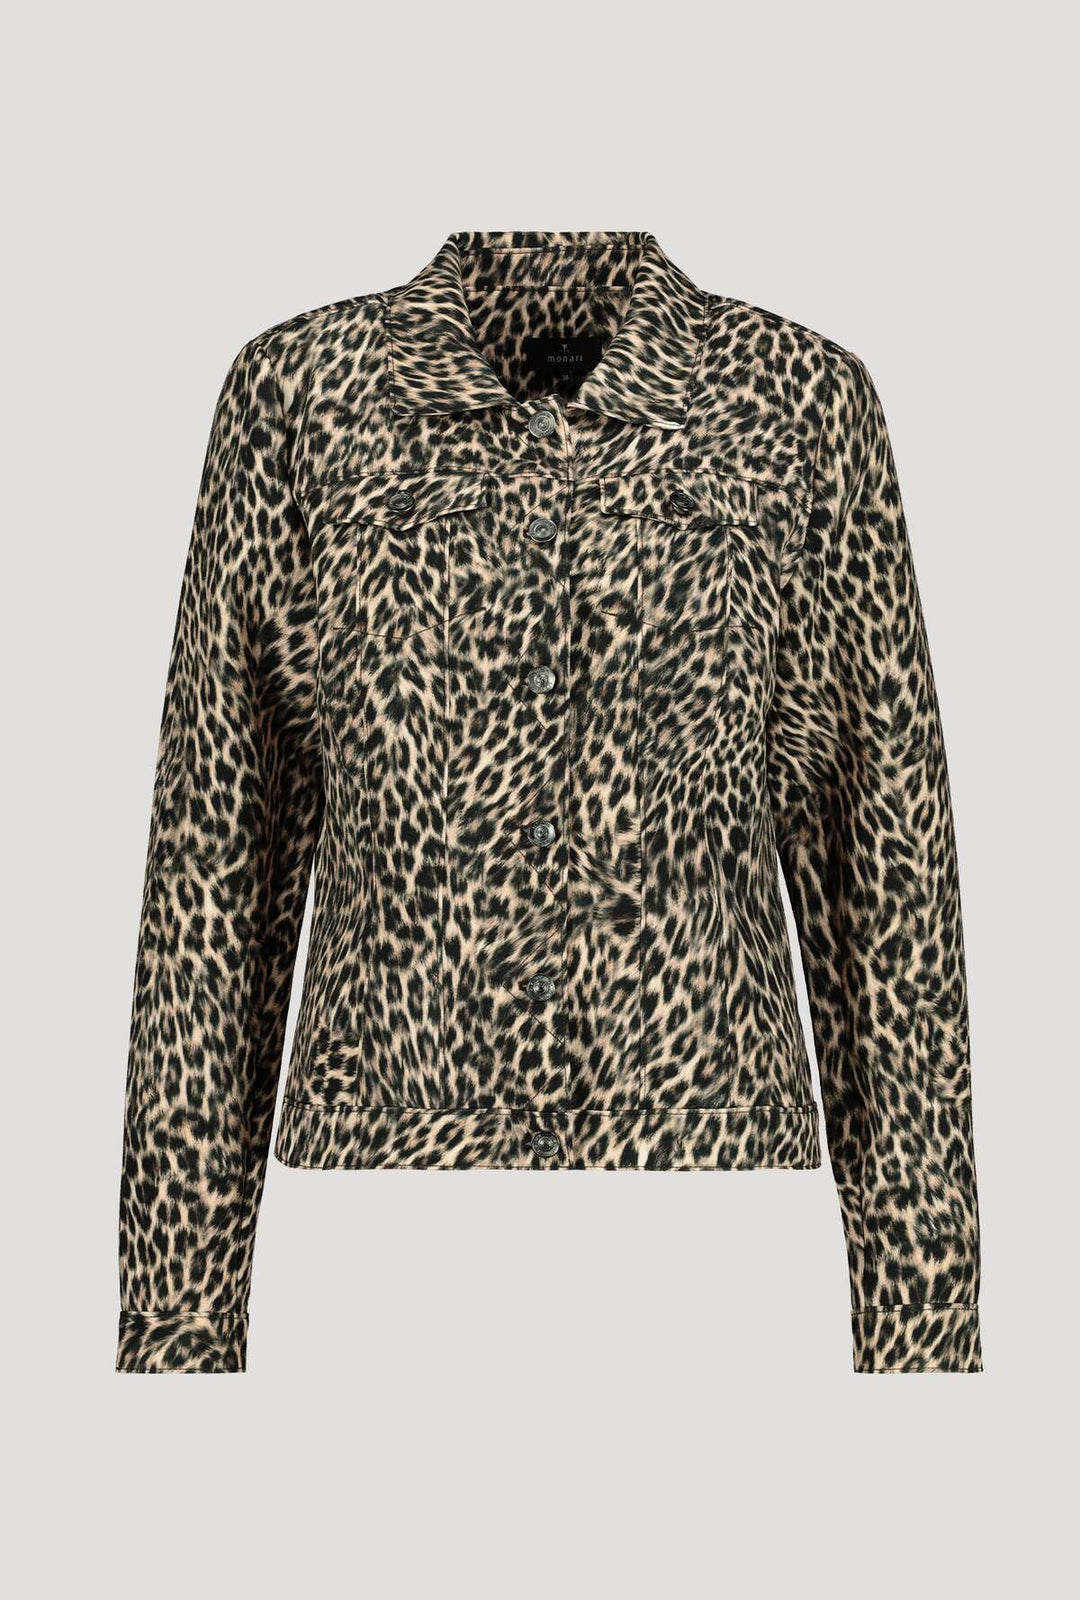 Monari 406312 Leopard Print Jacket